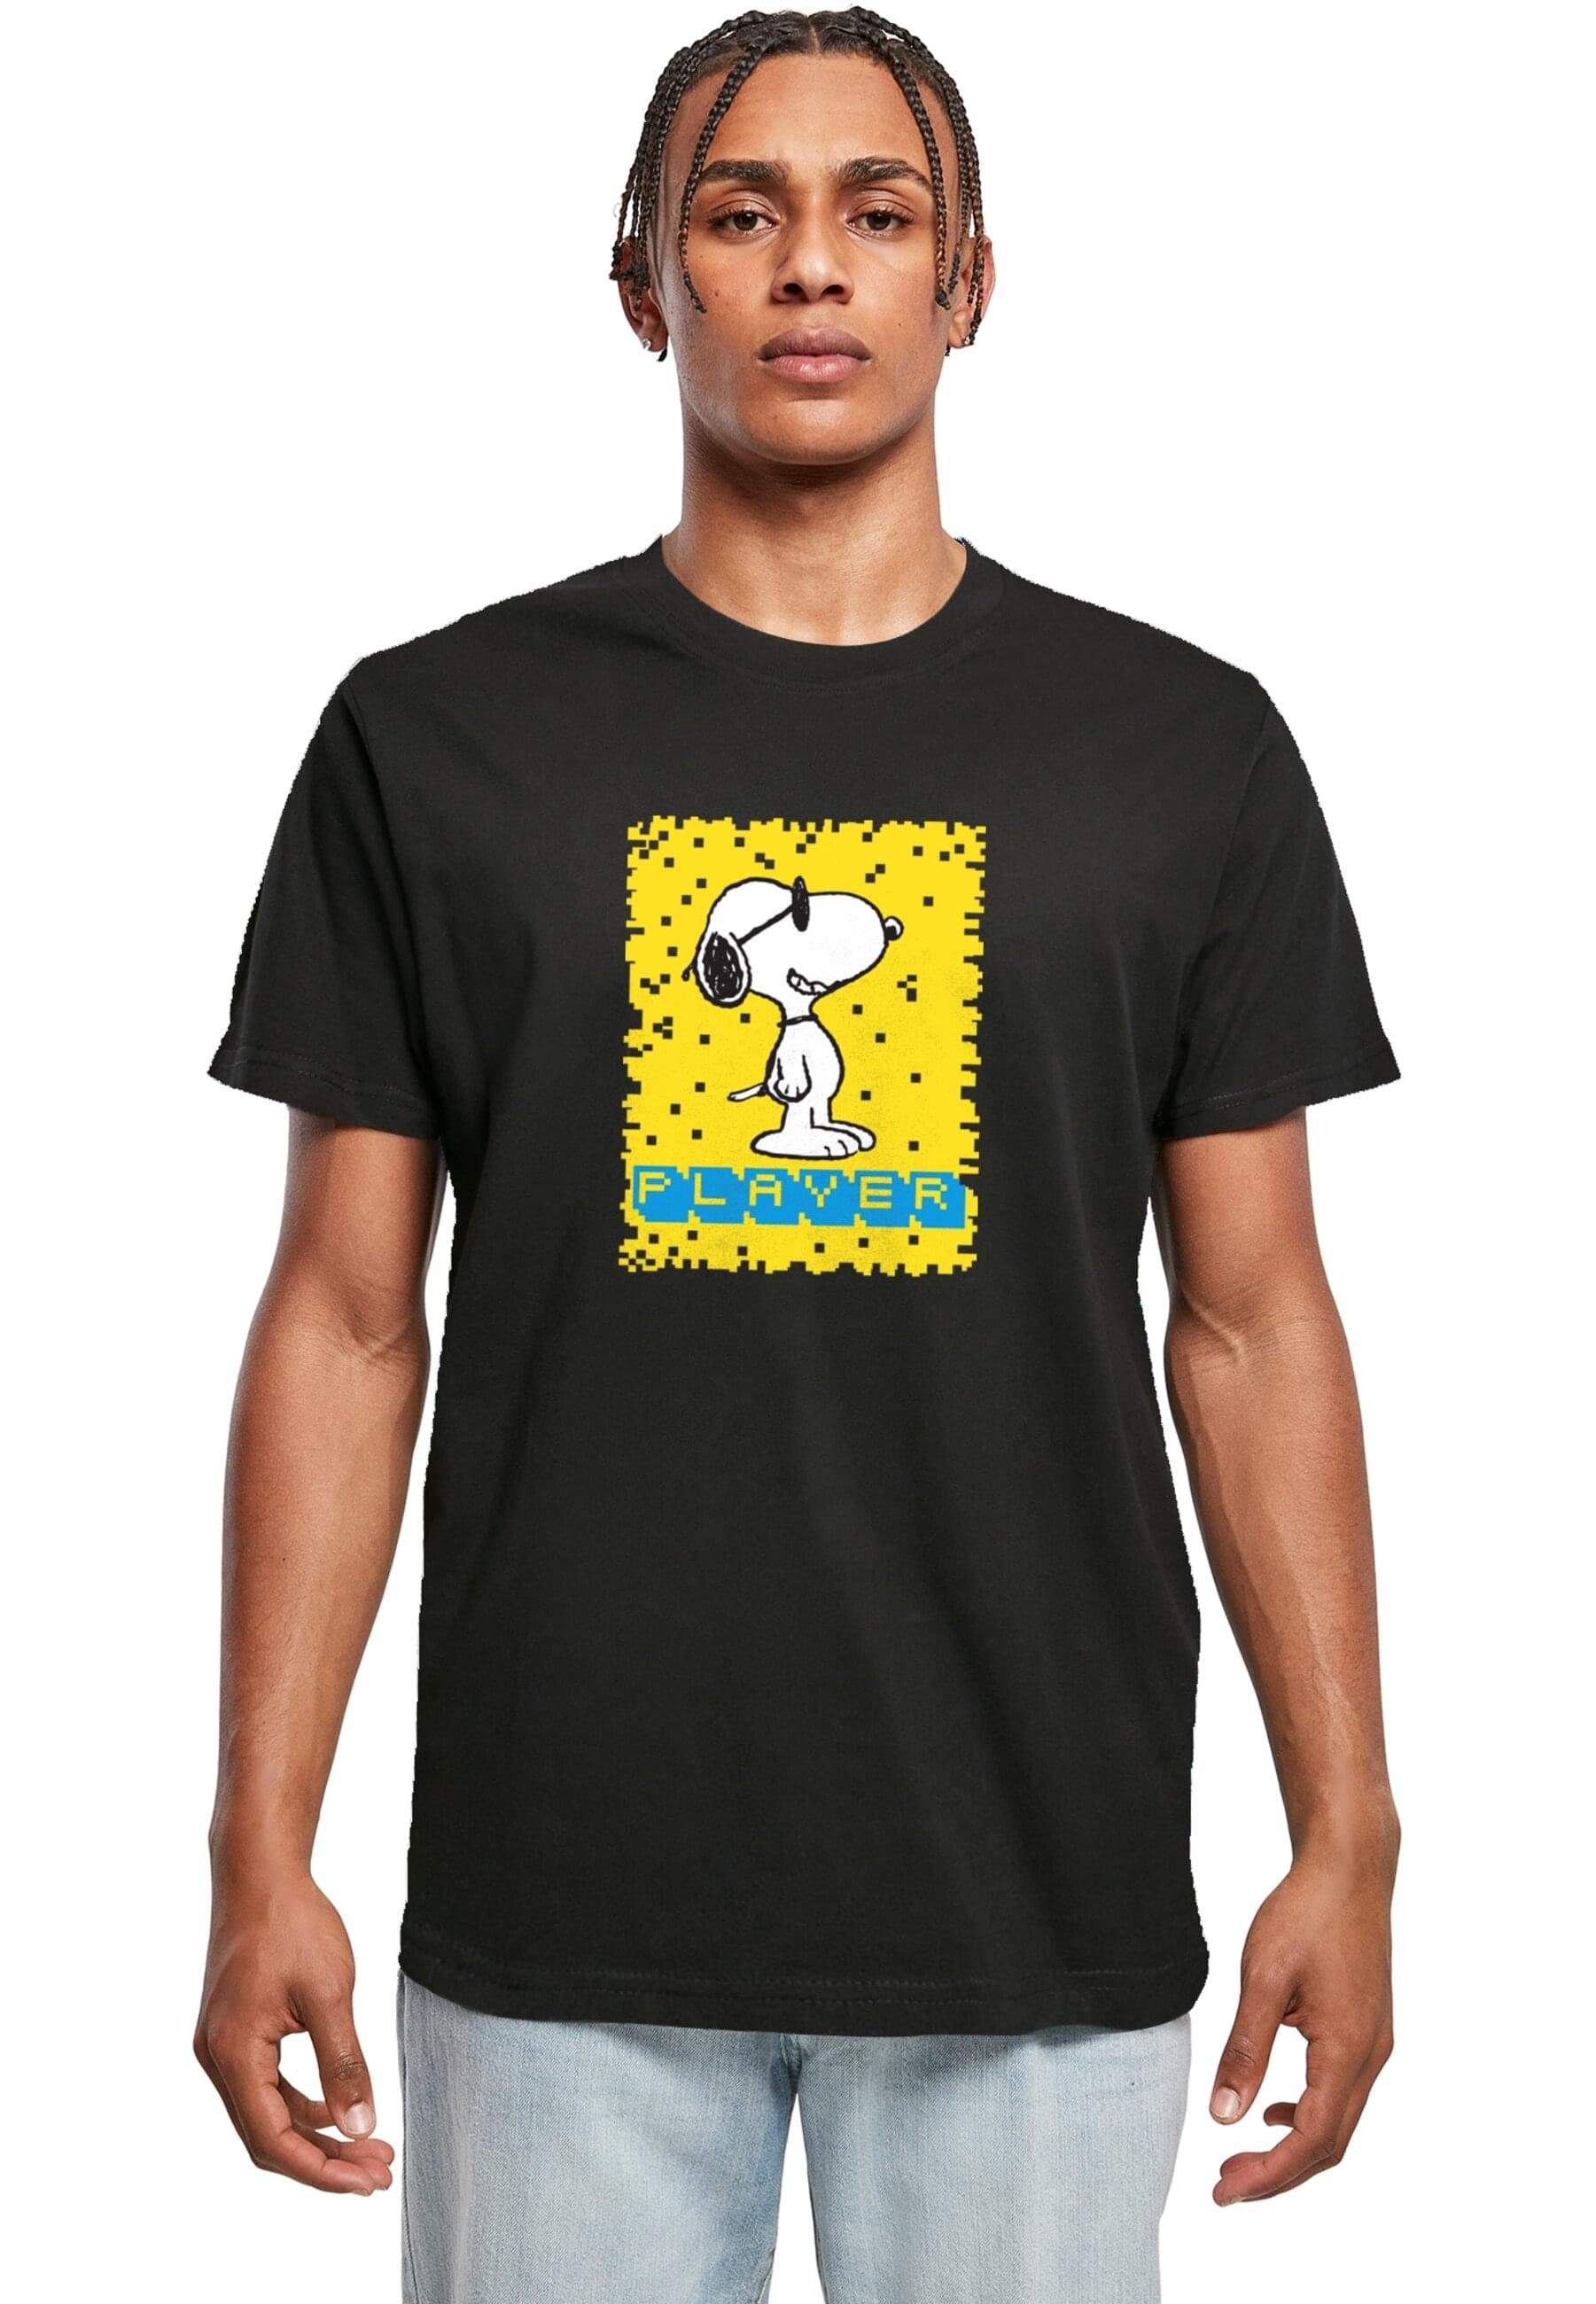 Peanuts Mode online kaufen » Peanuts Bekleidung | OTTO | T-Shirts